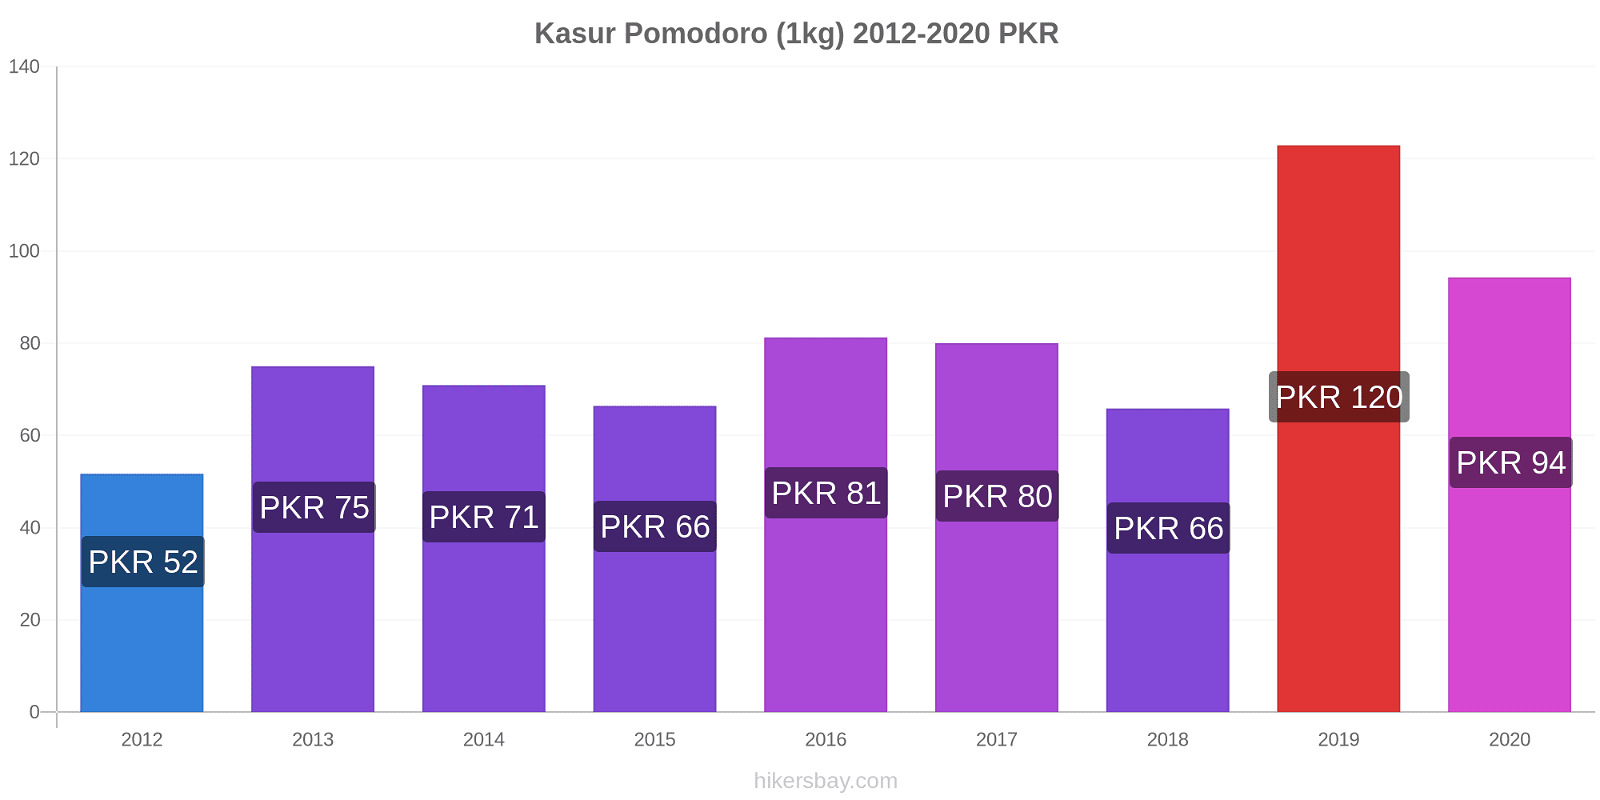 Kasur variazioni di prezzo Pomodoro (1kg) hikersbay.com